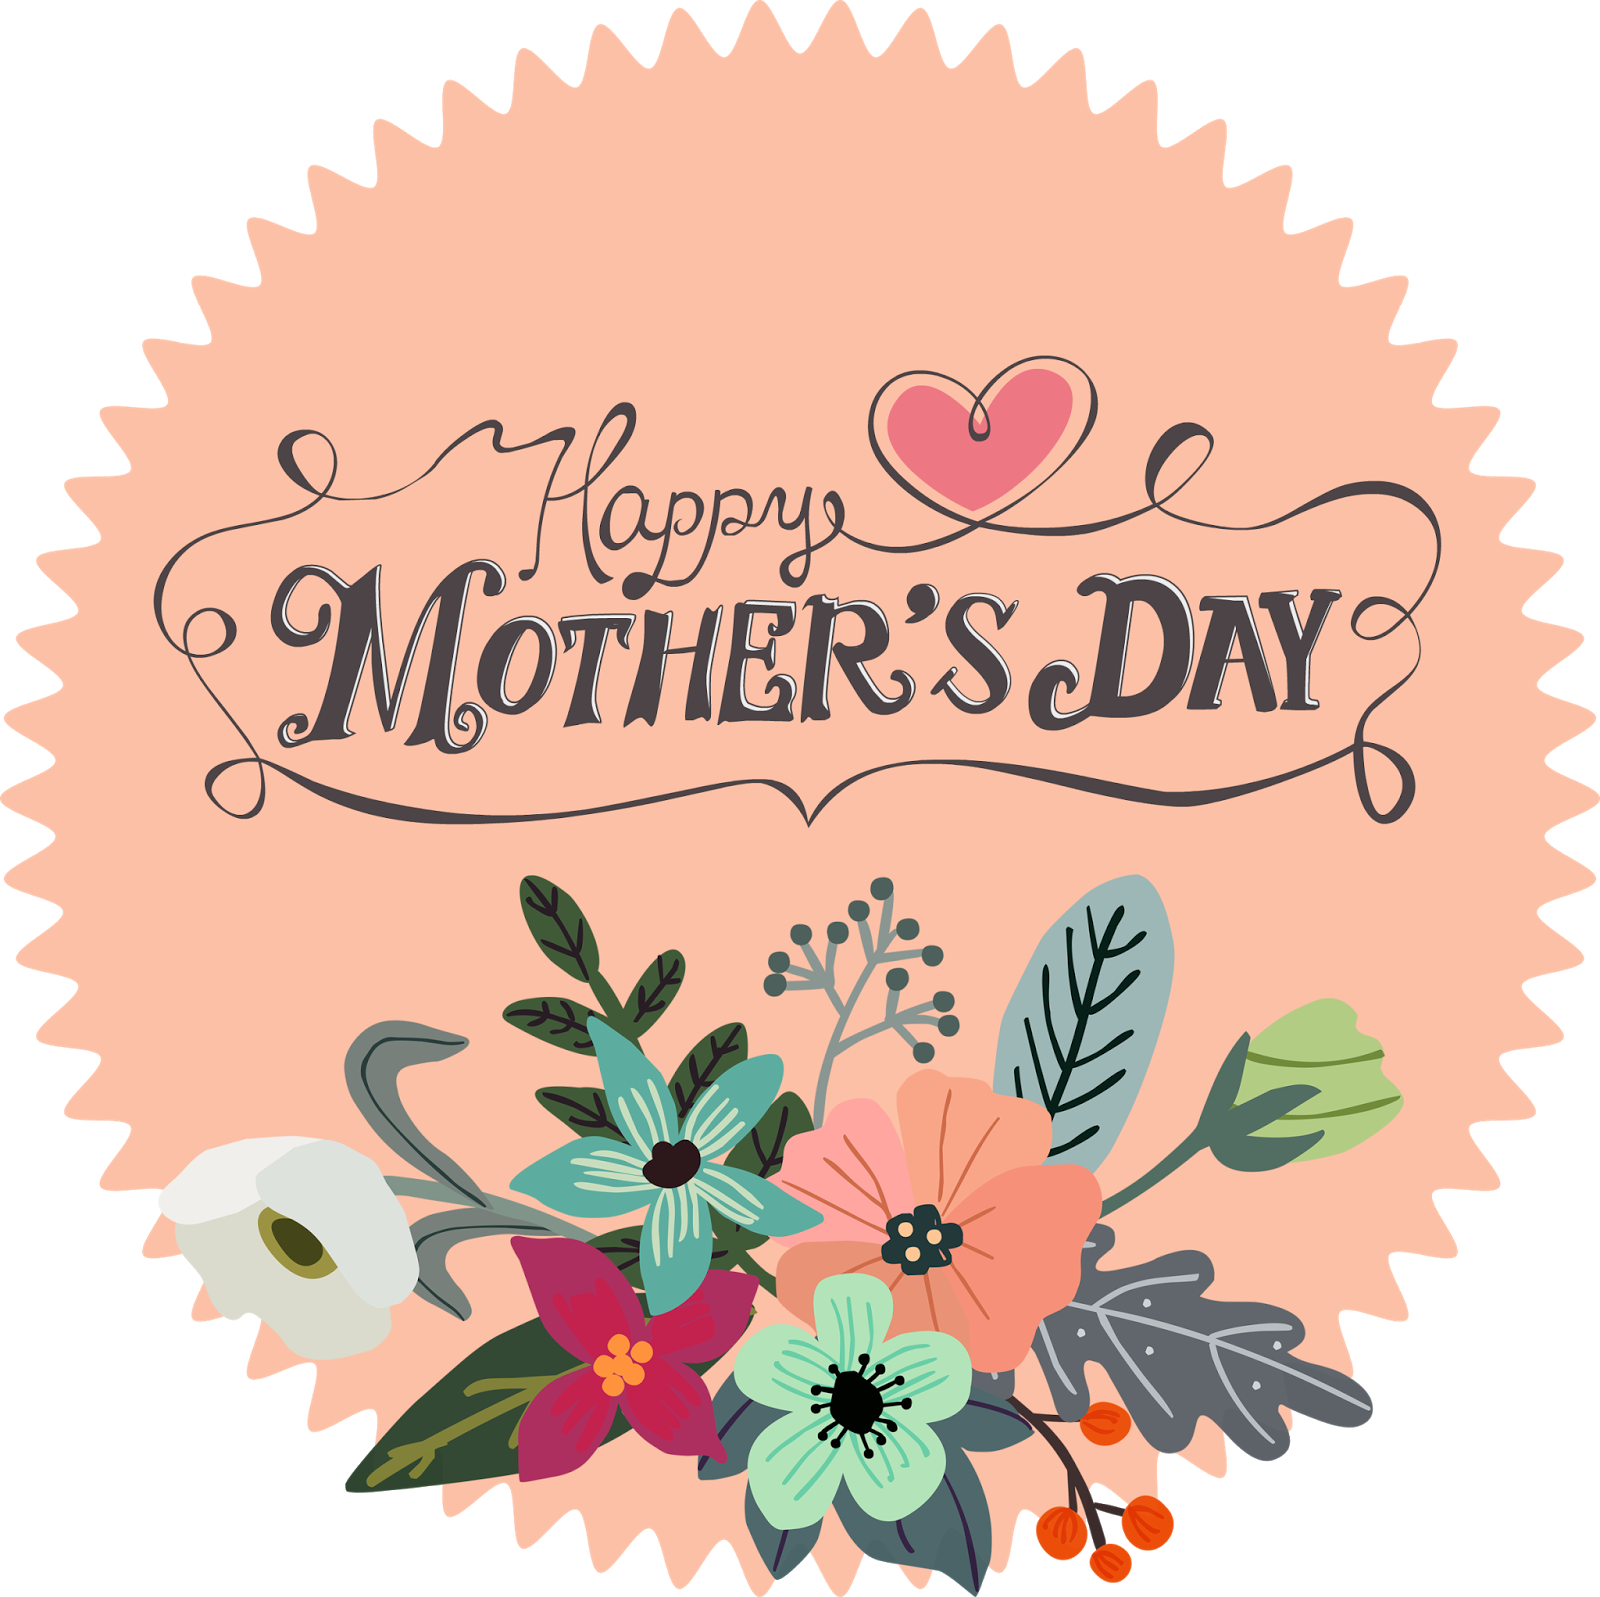 Happy mothers Day открытки. Mother's Day открытка. Стикеры для мамы. Круглые открытки маме.